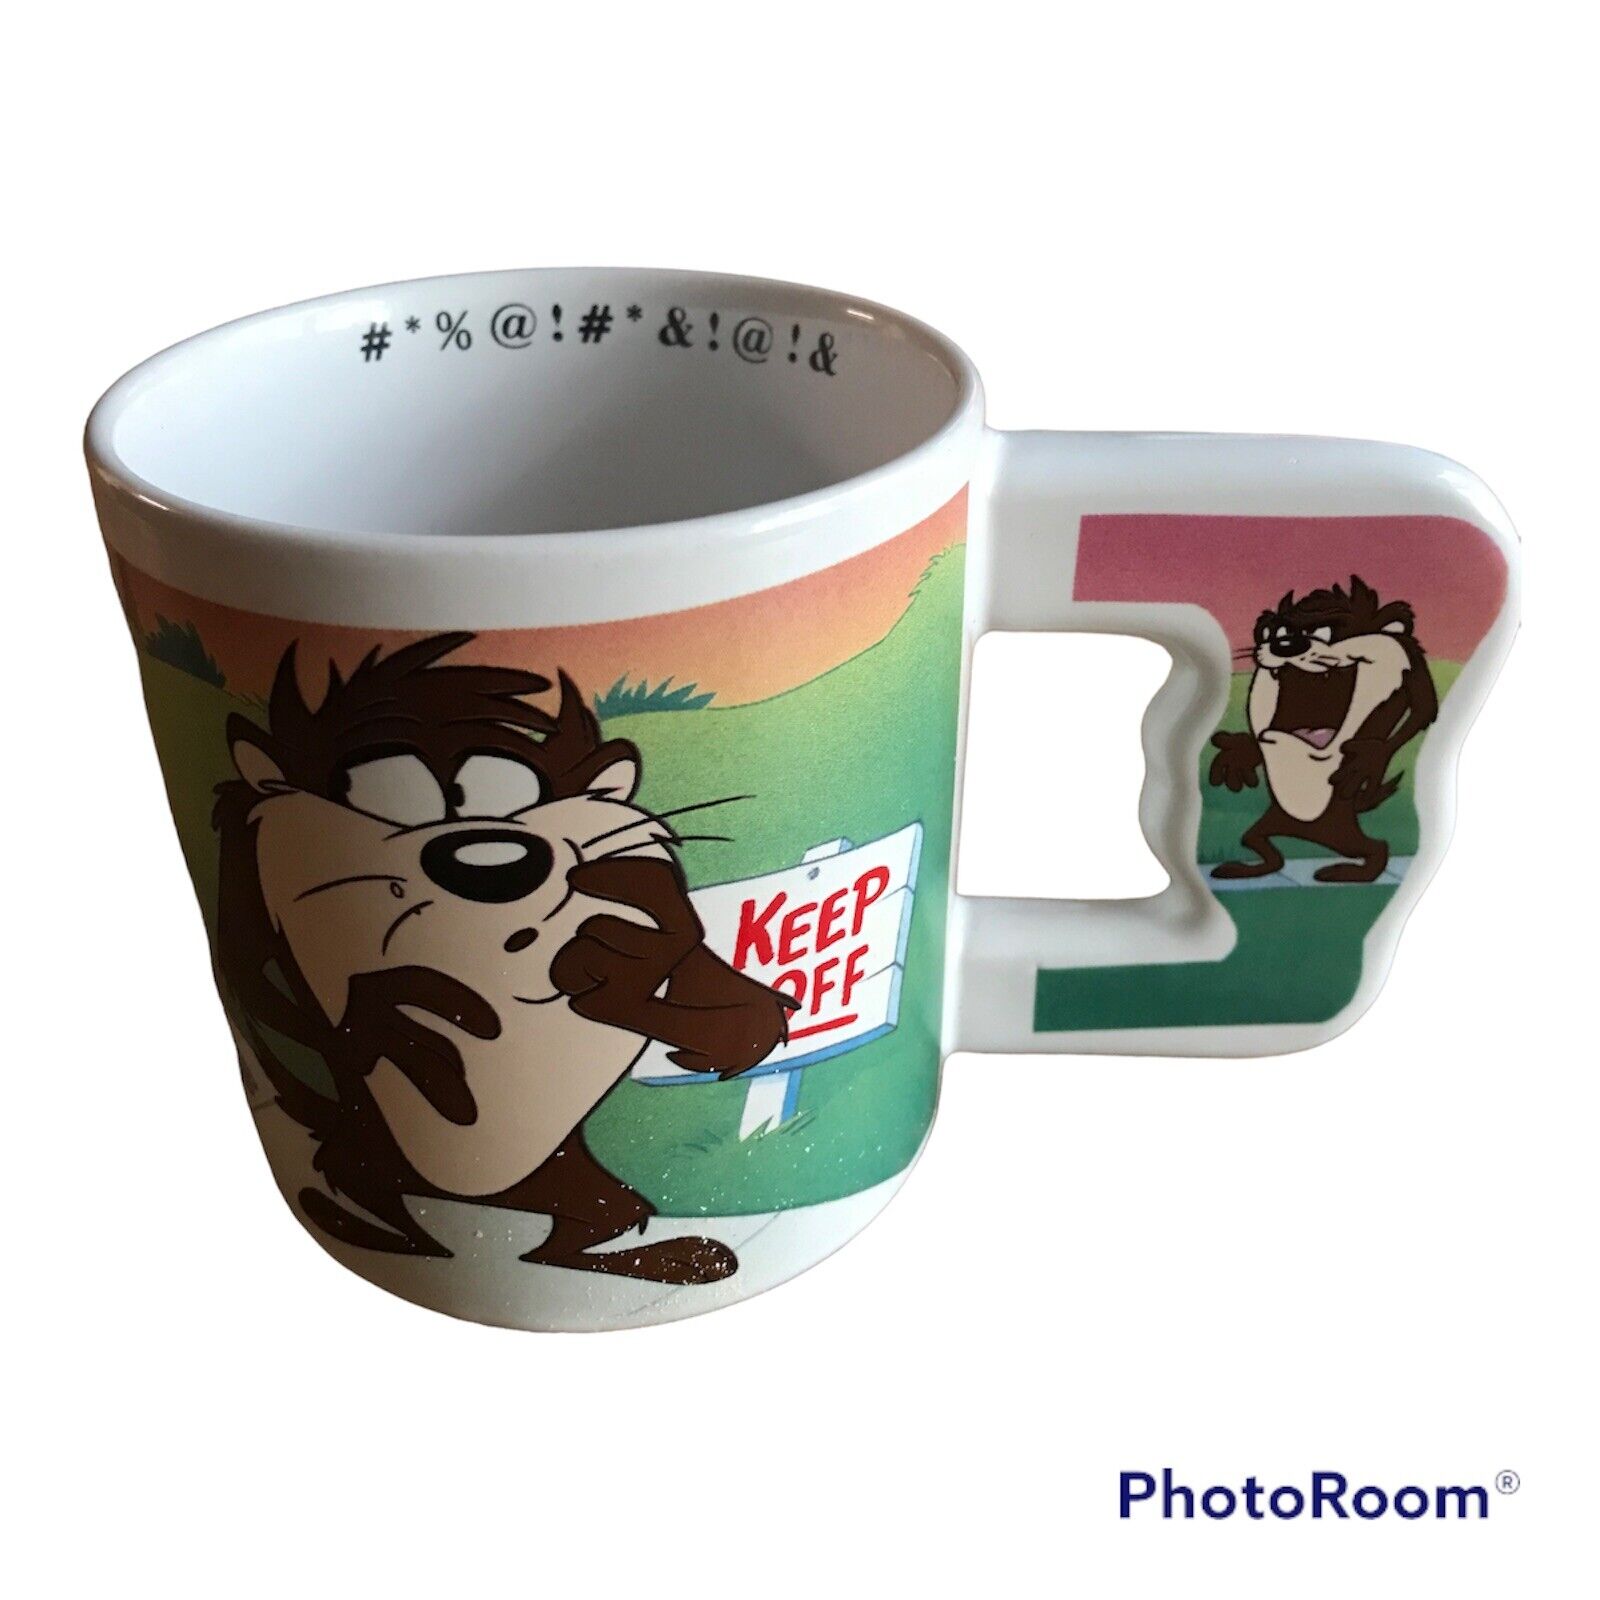 Vintage 1992 Taz “Keep Off” Coffee Cup Mug Warner Bros Studio Store Collection